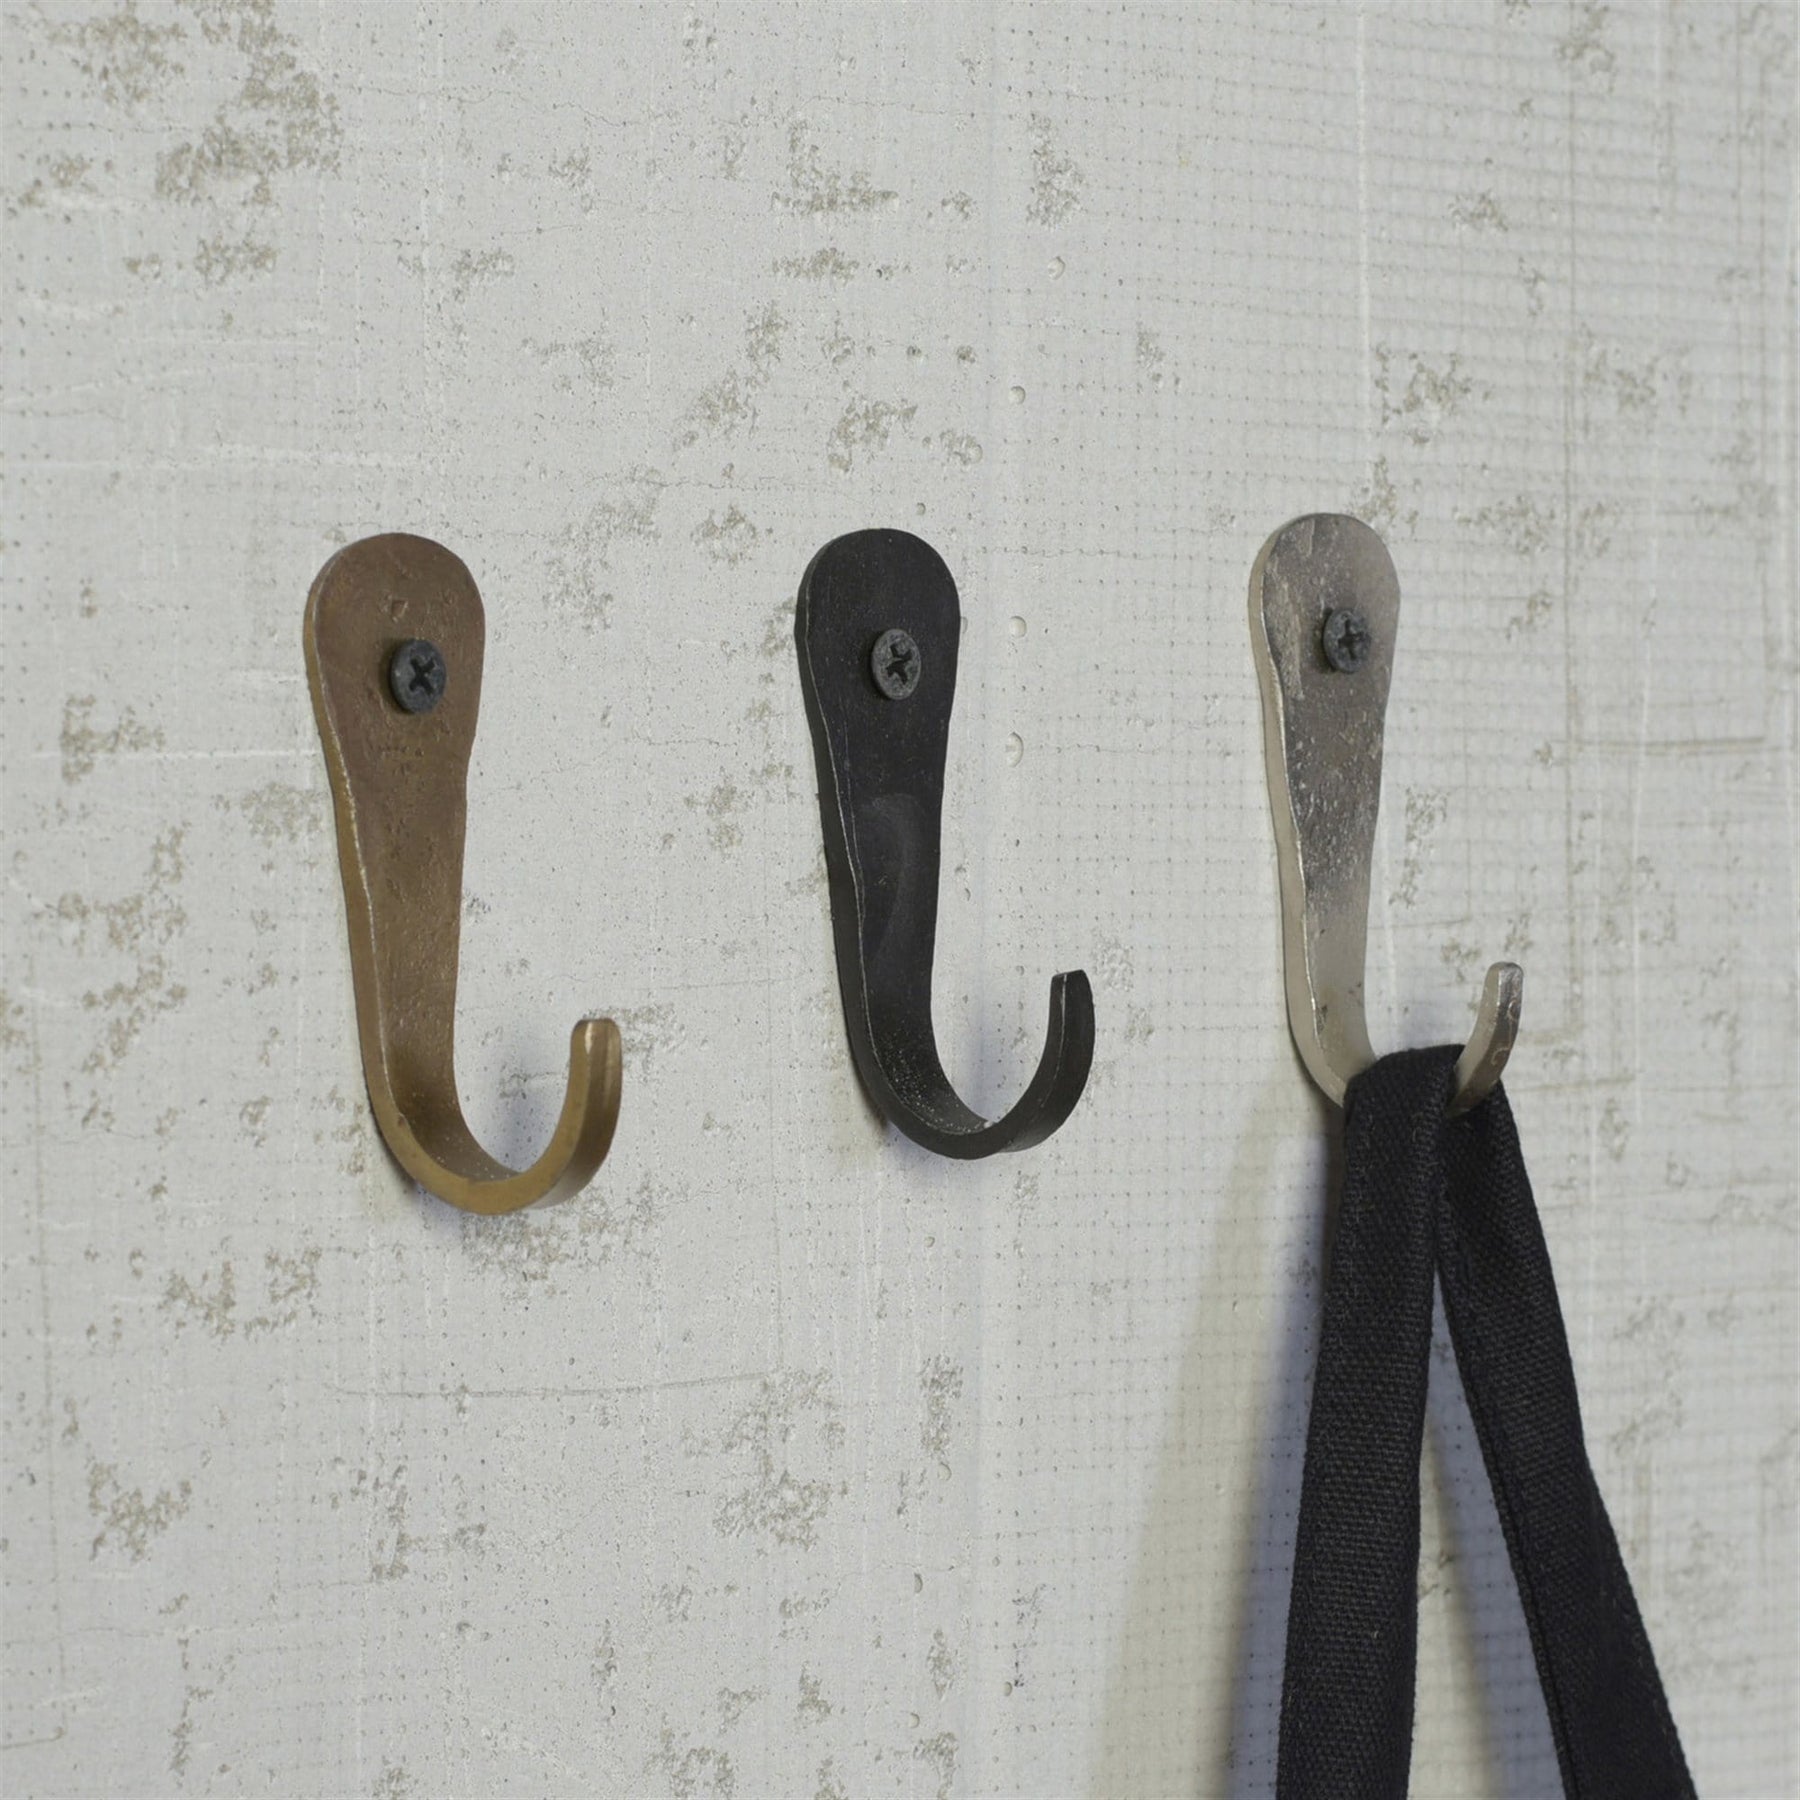 Dotsy Wall Hook - Decorative & Functional